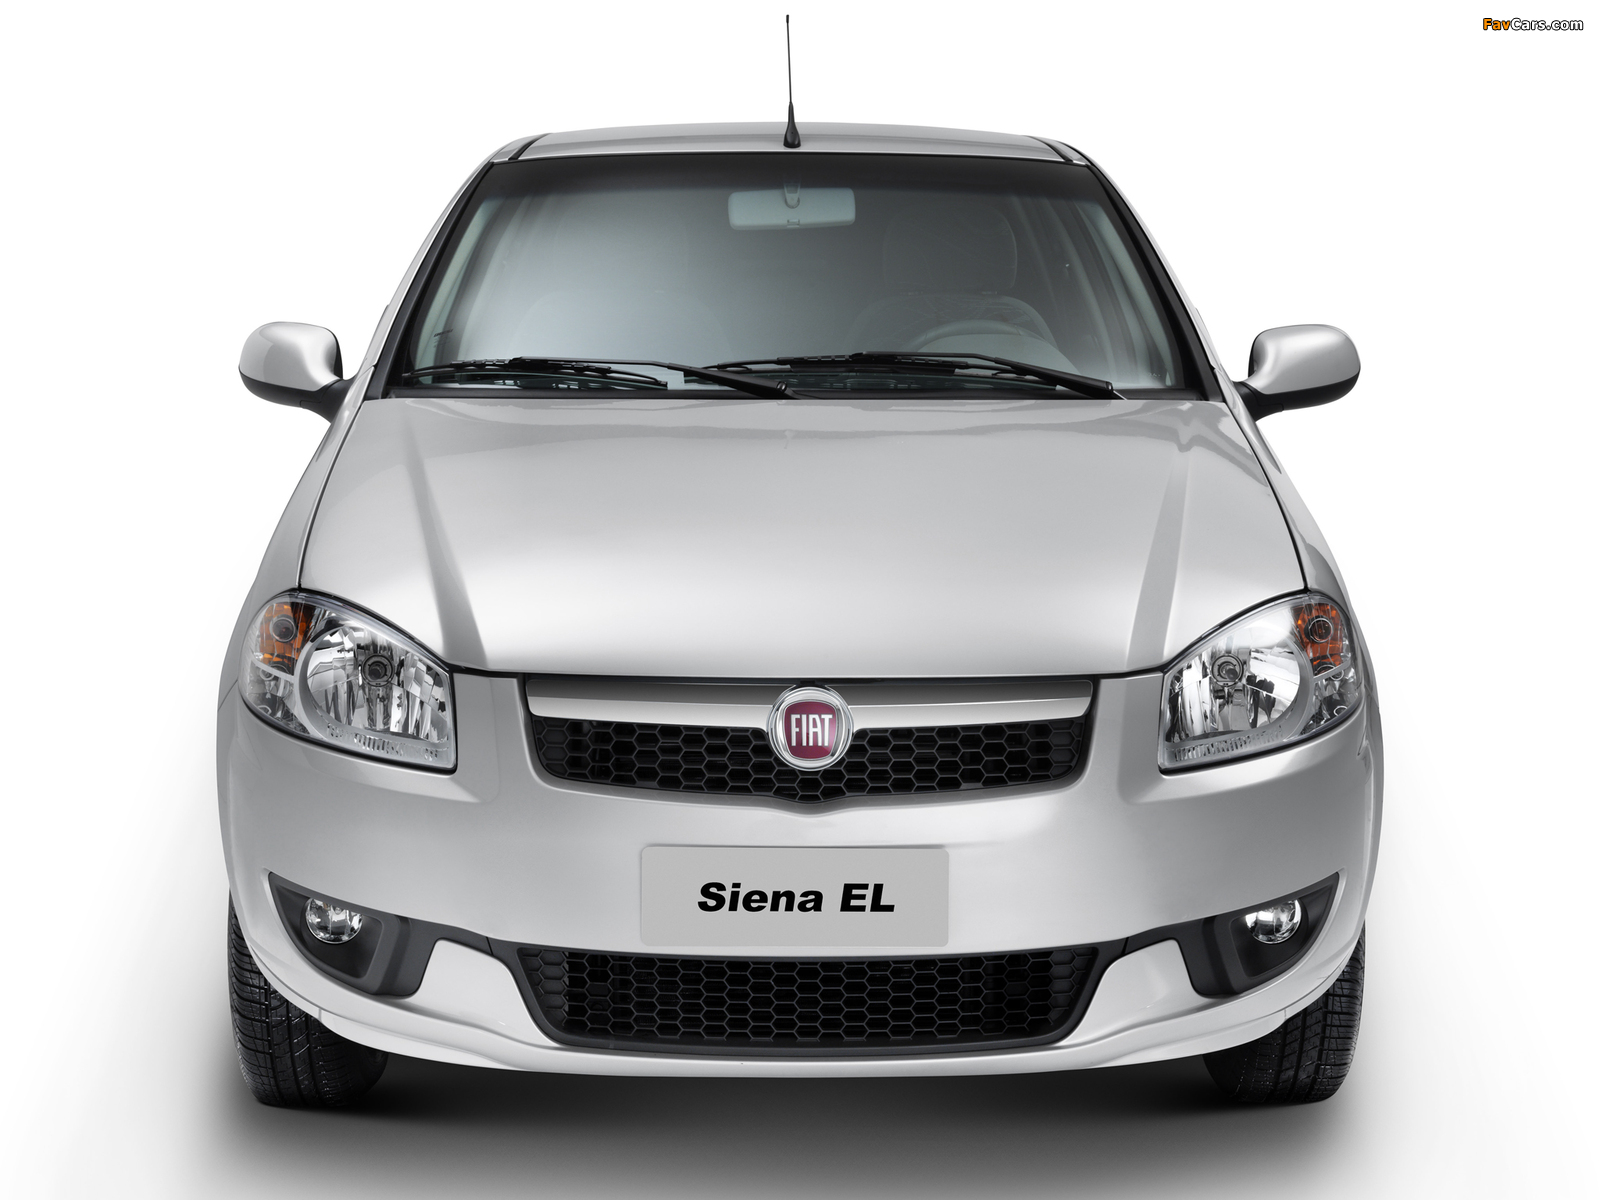 Fiat Siena EL (178) 2012 pictures (1600 x 1200)